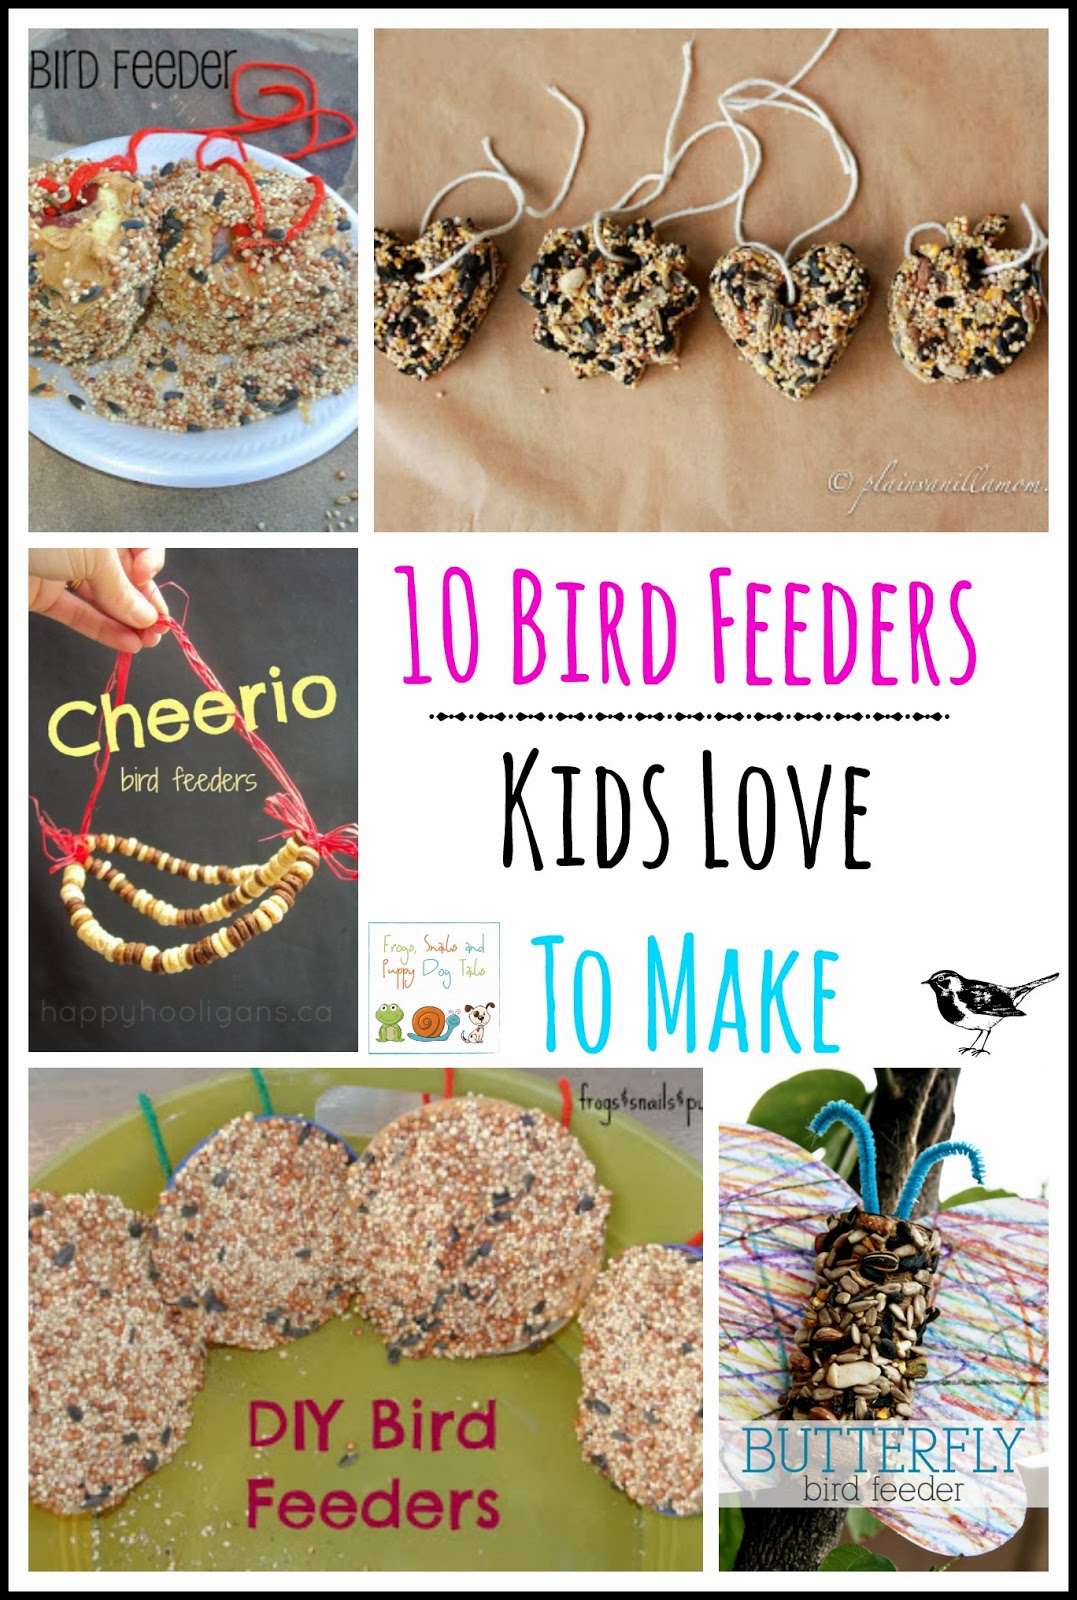 10 Bird Feeders Kids Love To Make - FSPDT